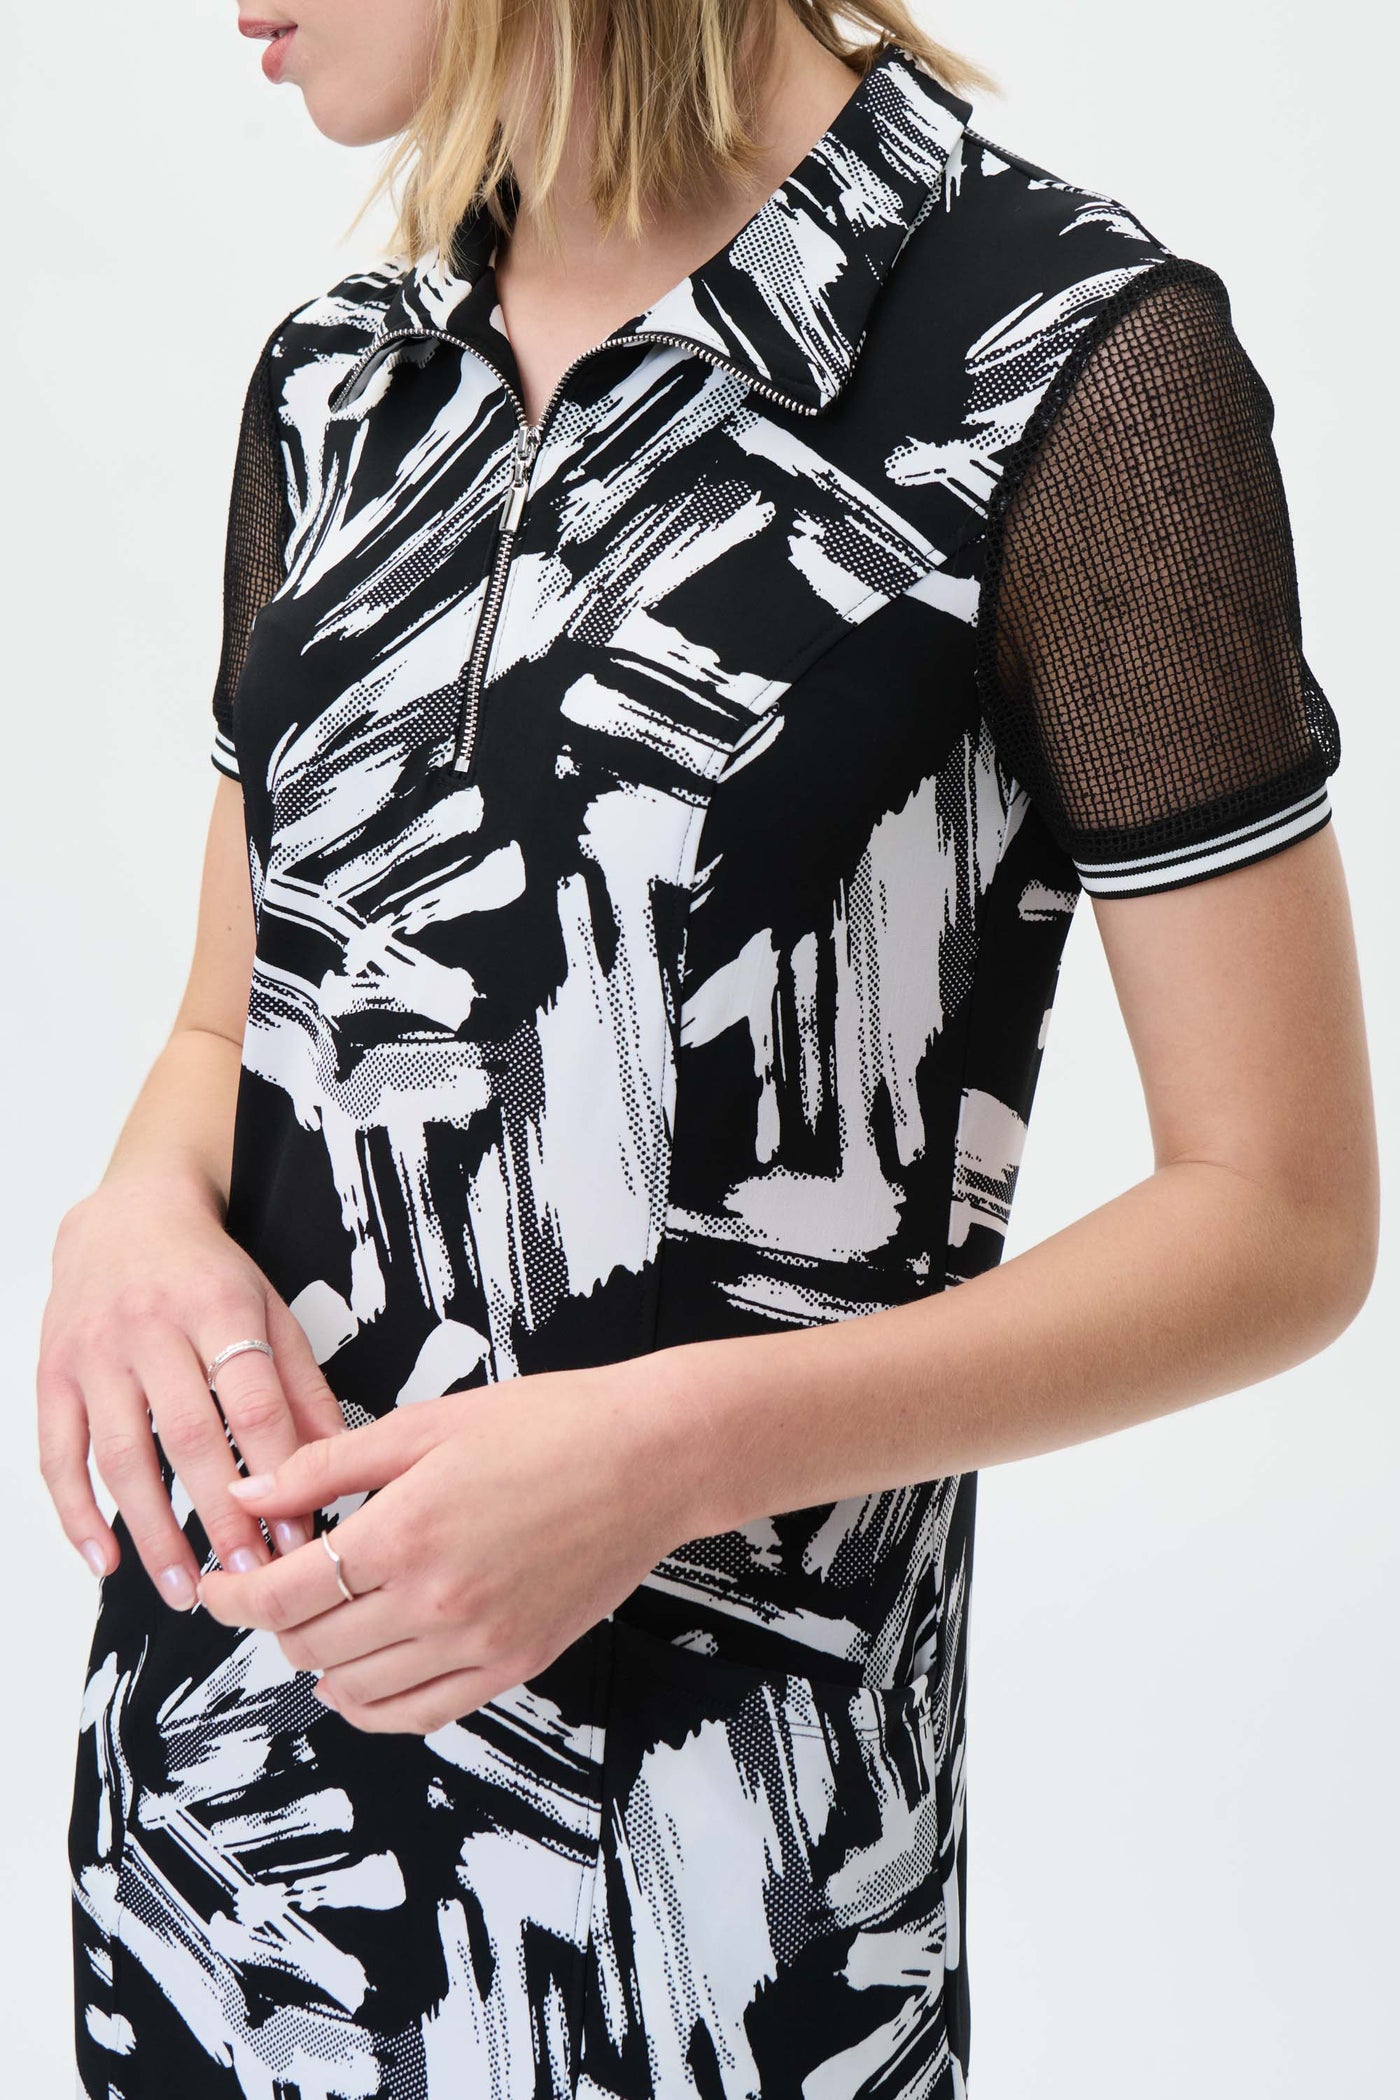 Joseph Ribkoff Printed Silky Knit Dress Style 231150 